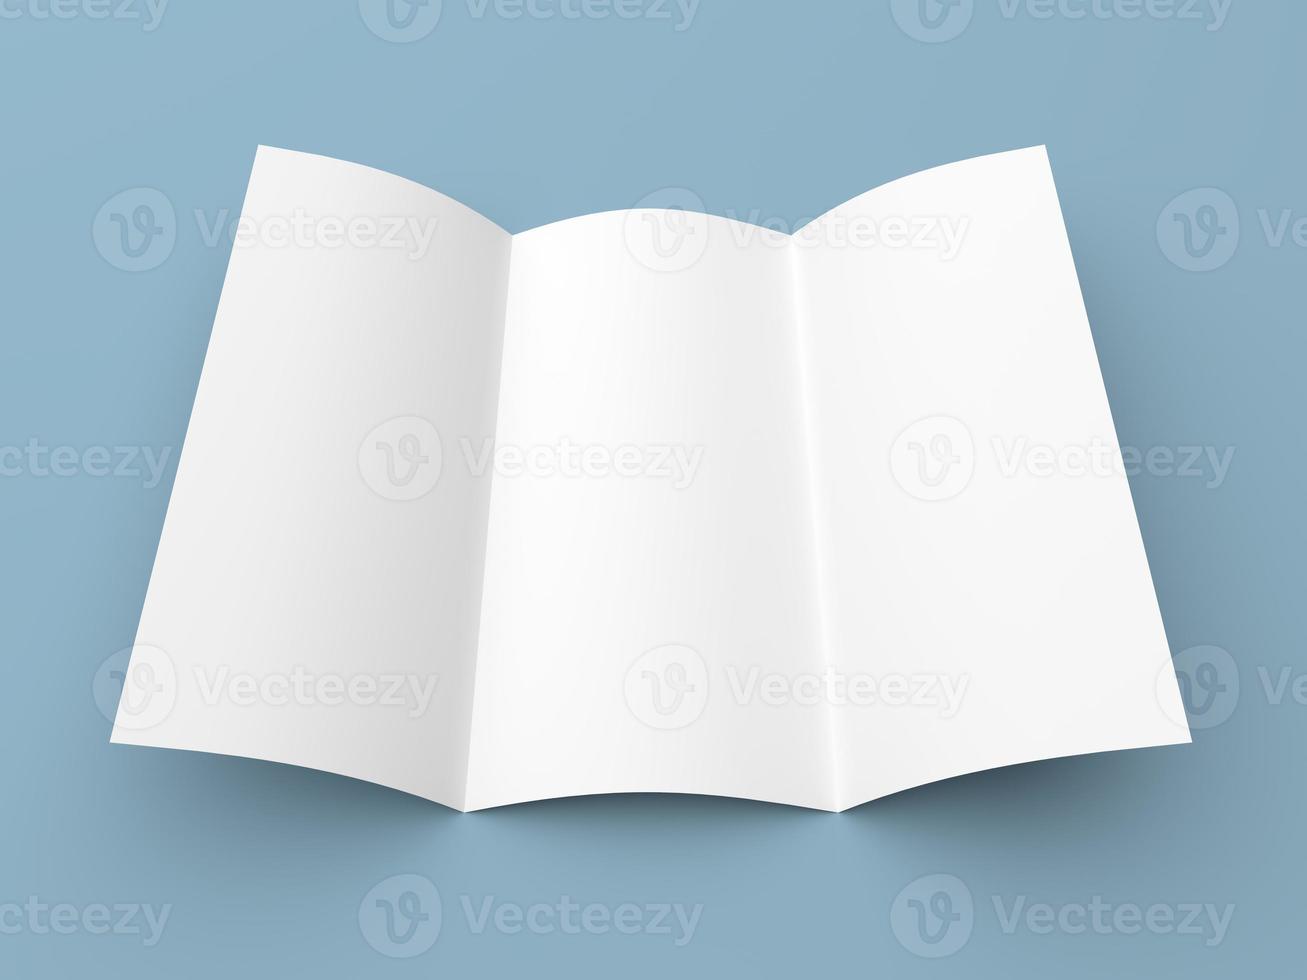 Leaflet blank tri-fold white paper brochure photo